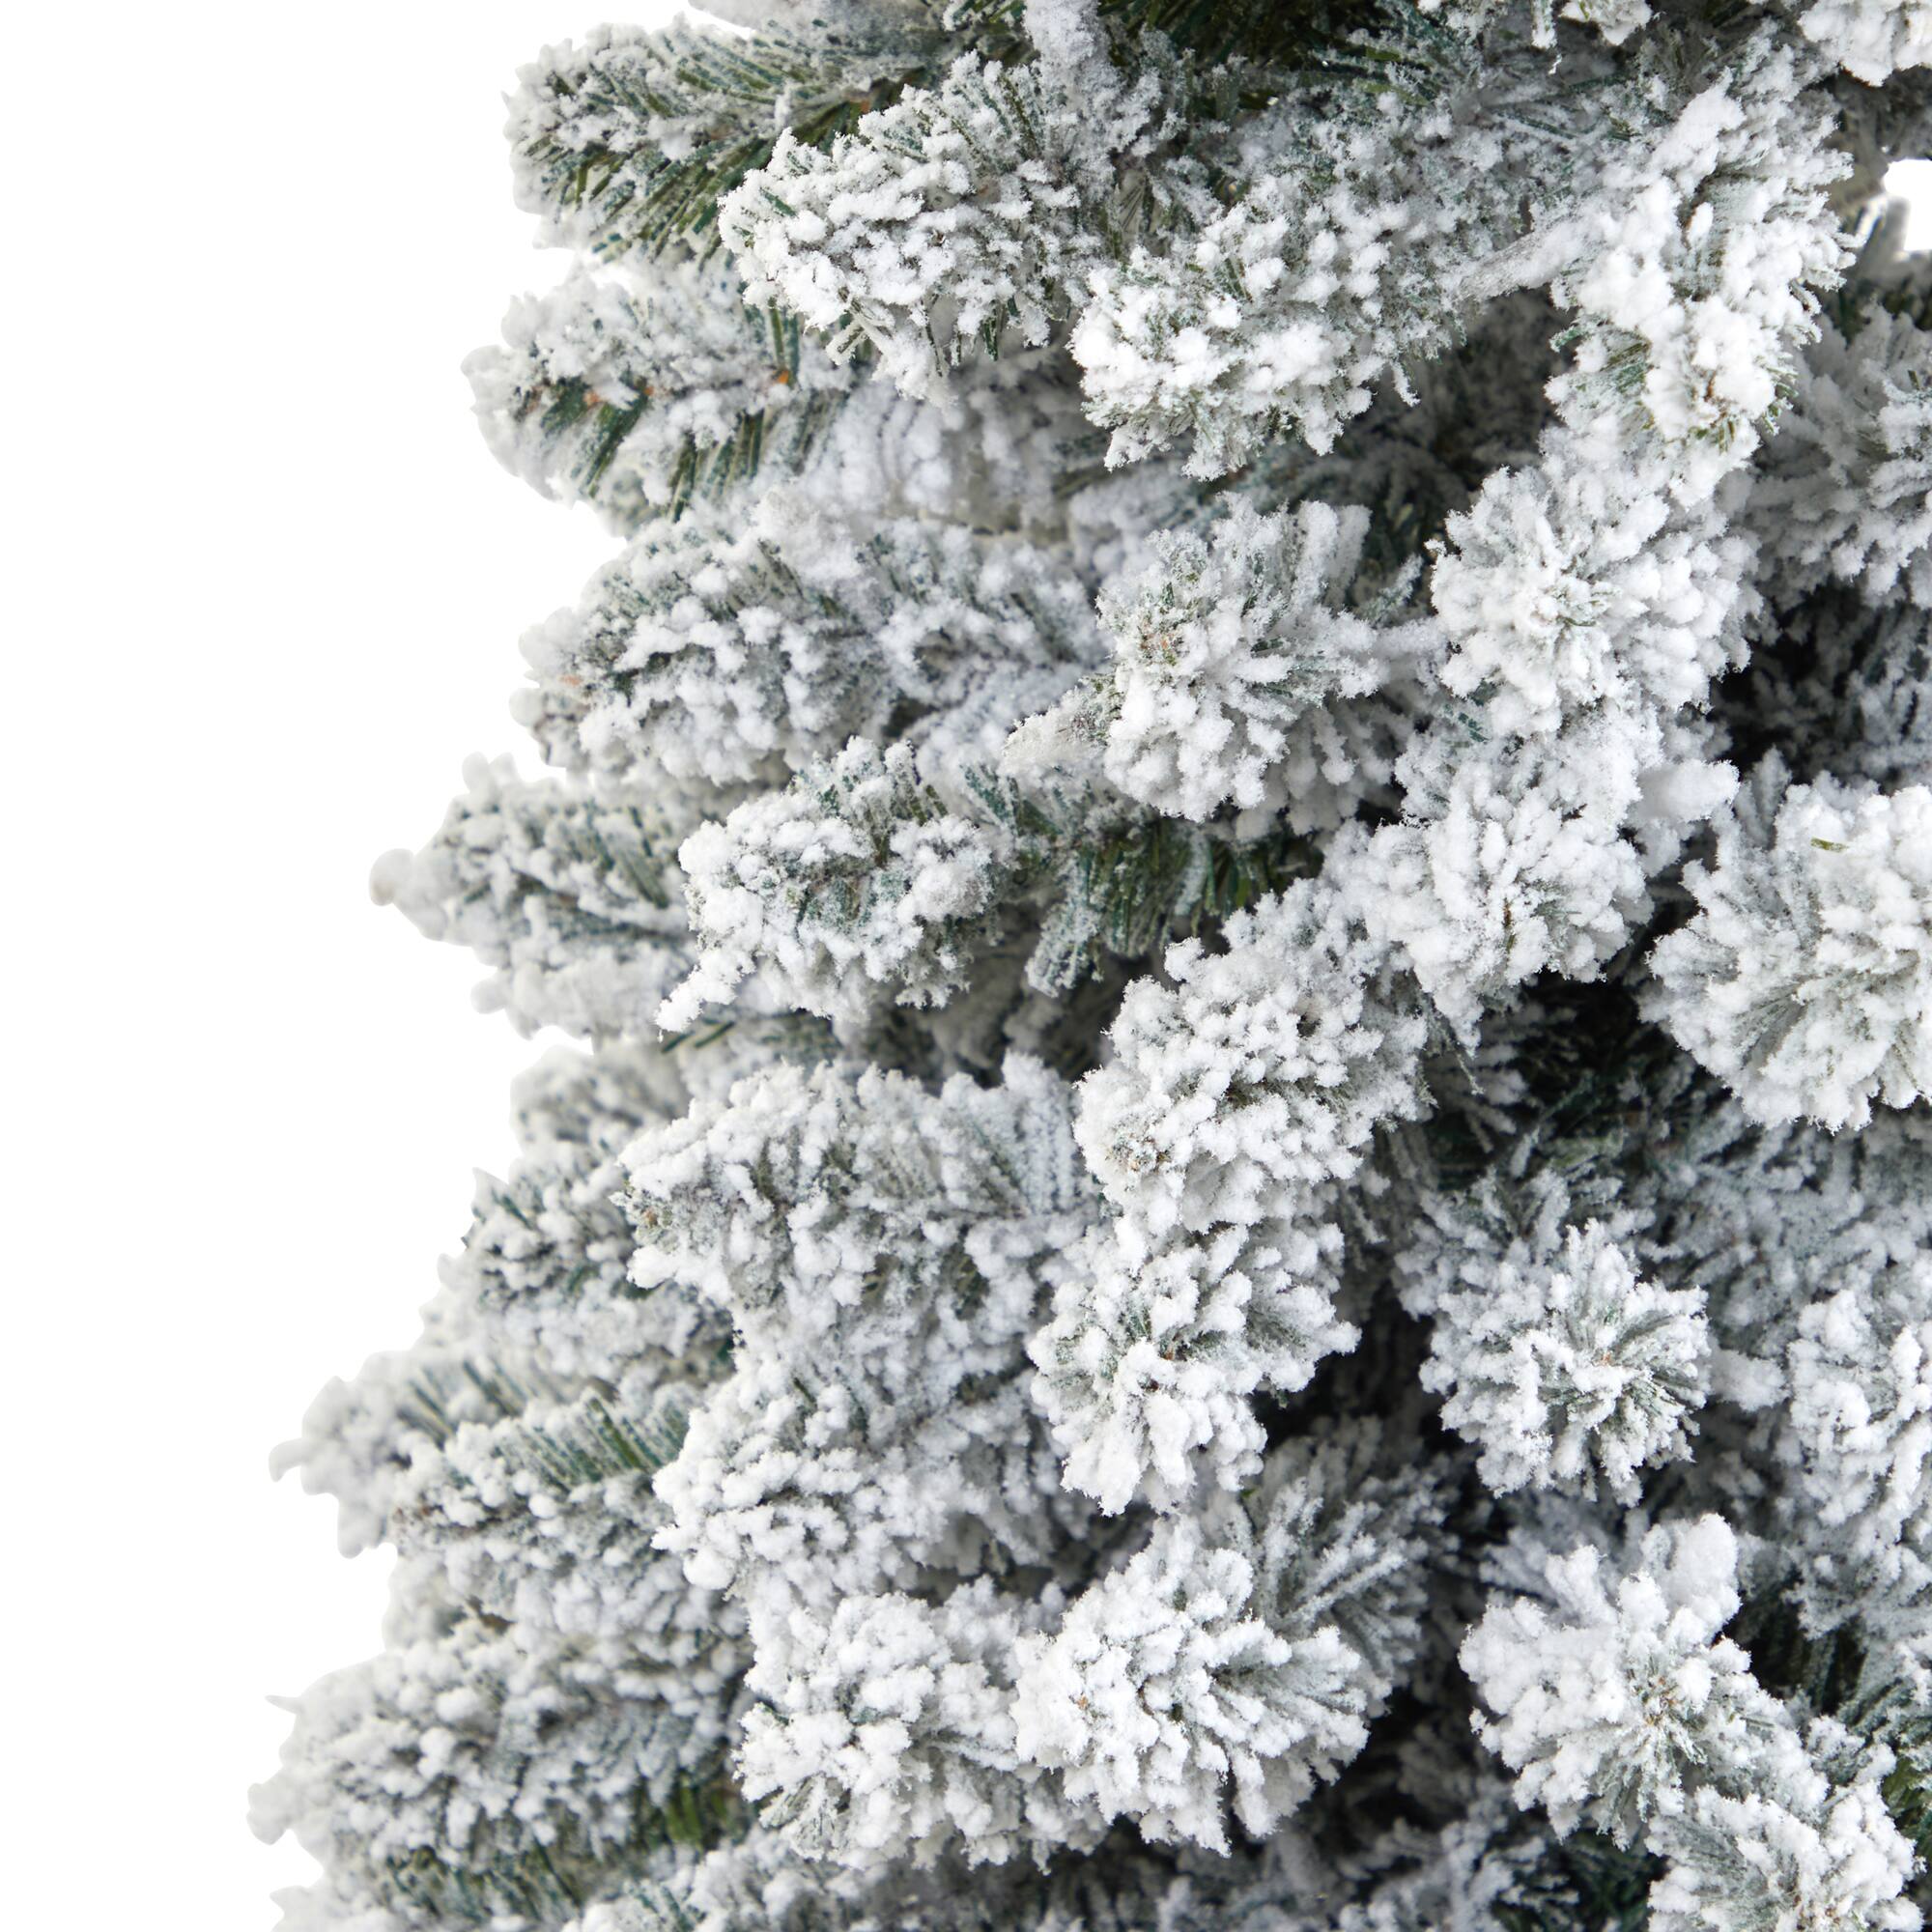 7ft. Unlit Flocked Artificial Christmas Tree